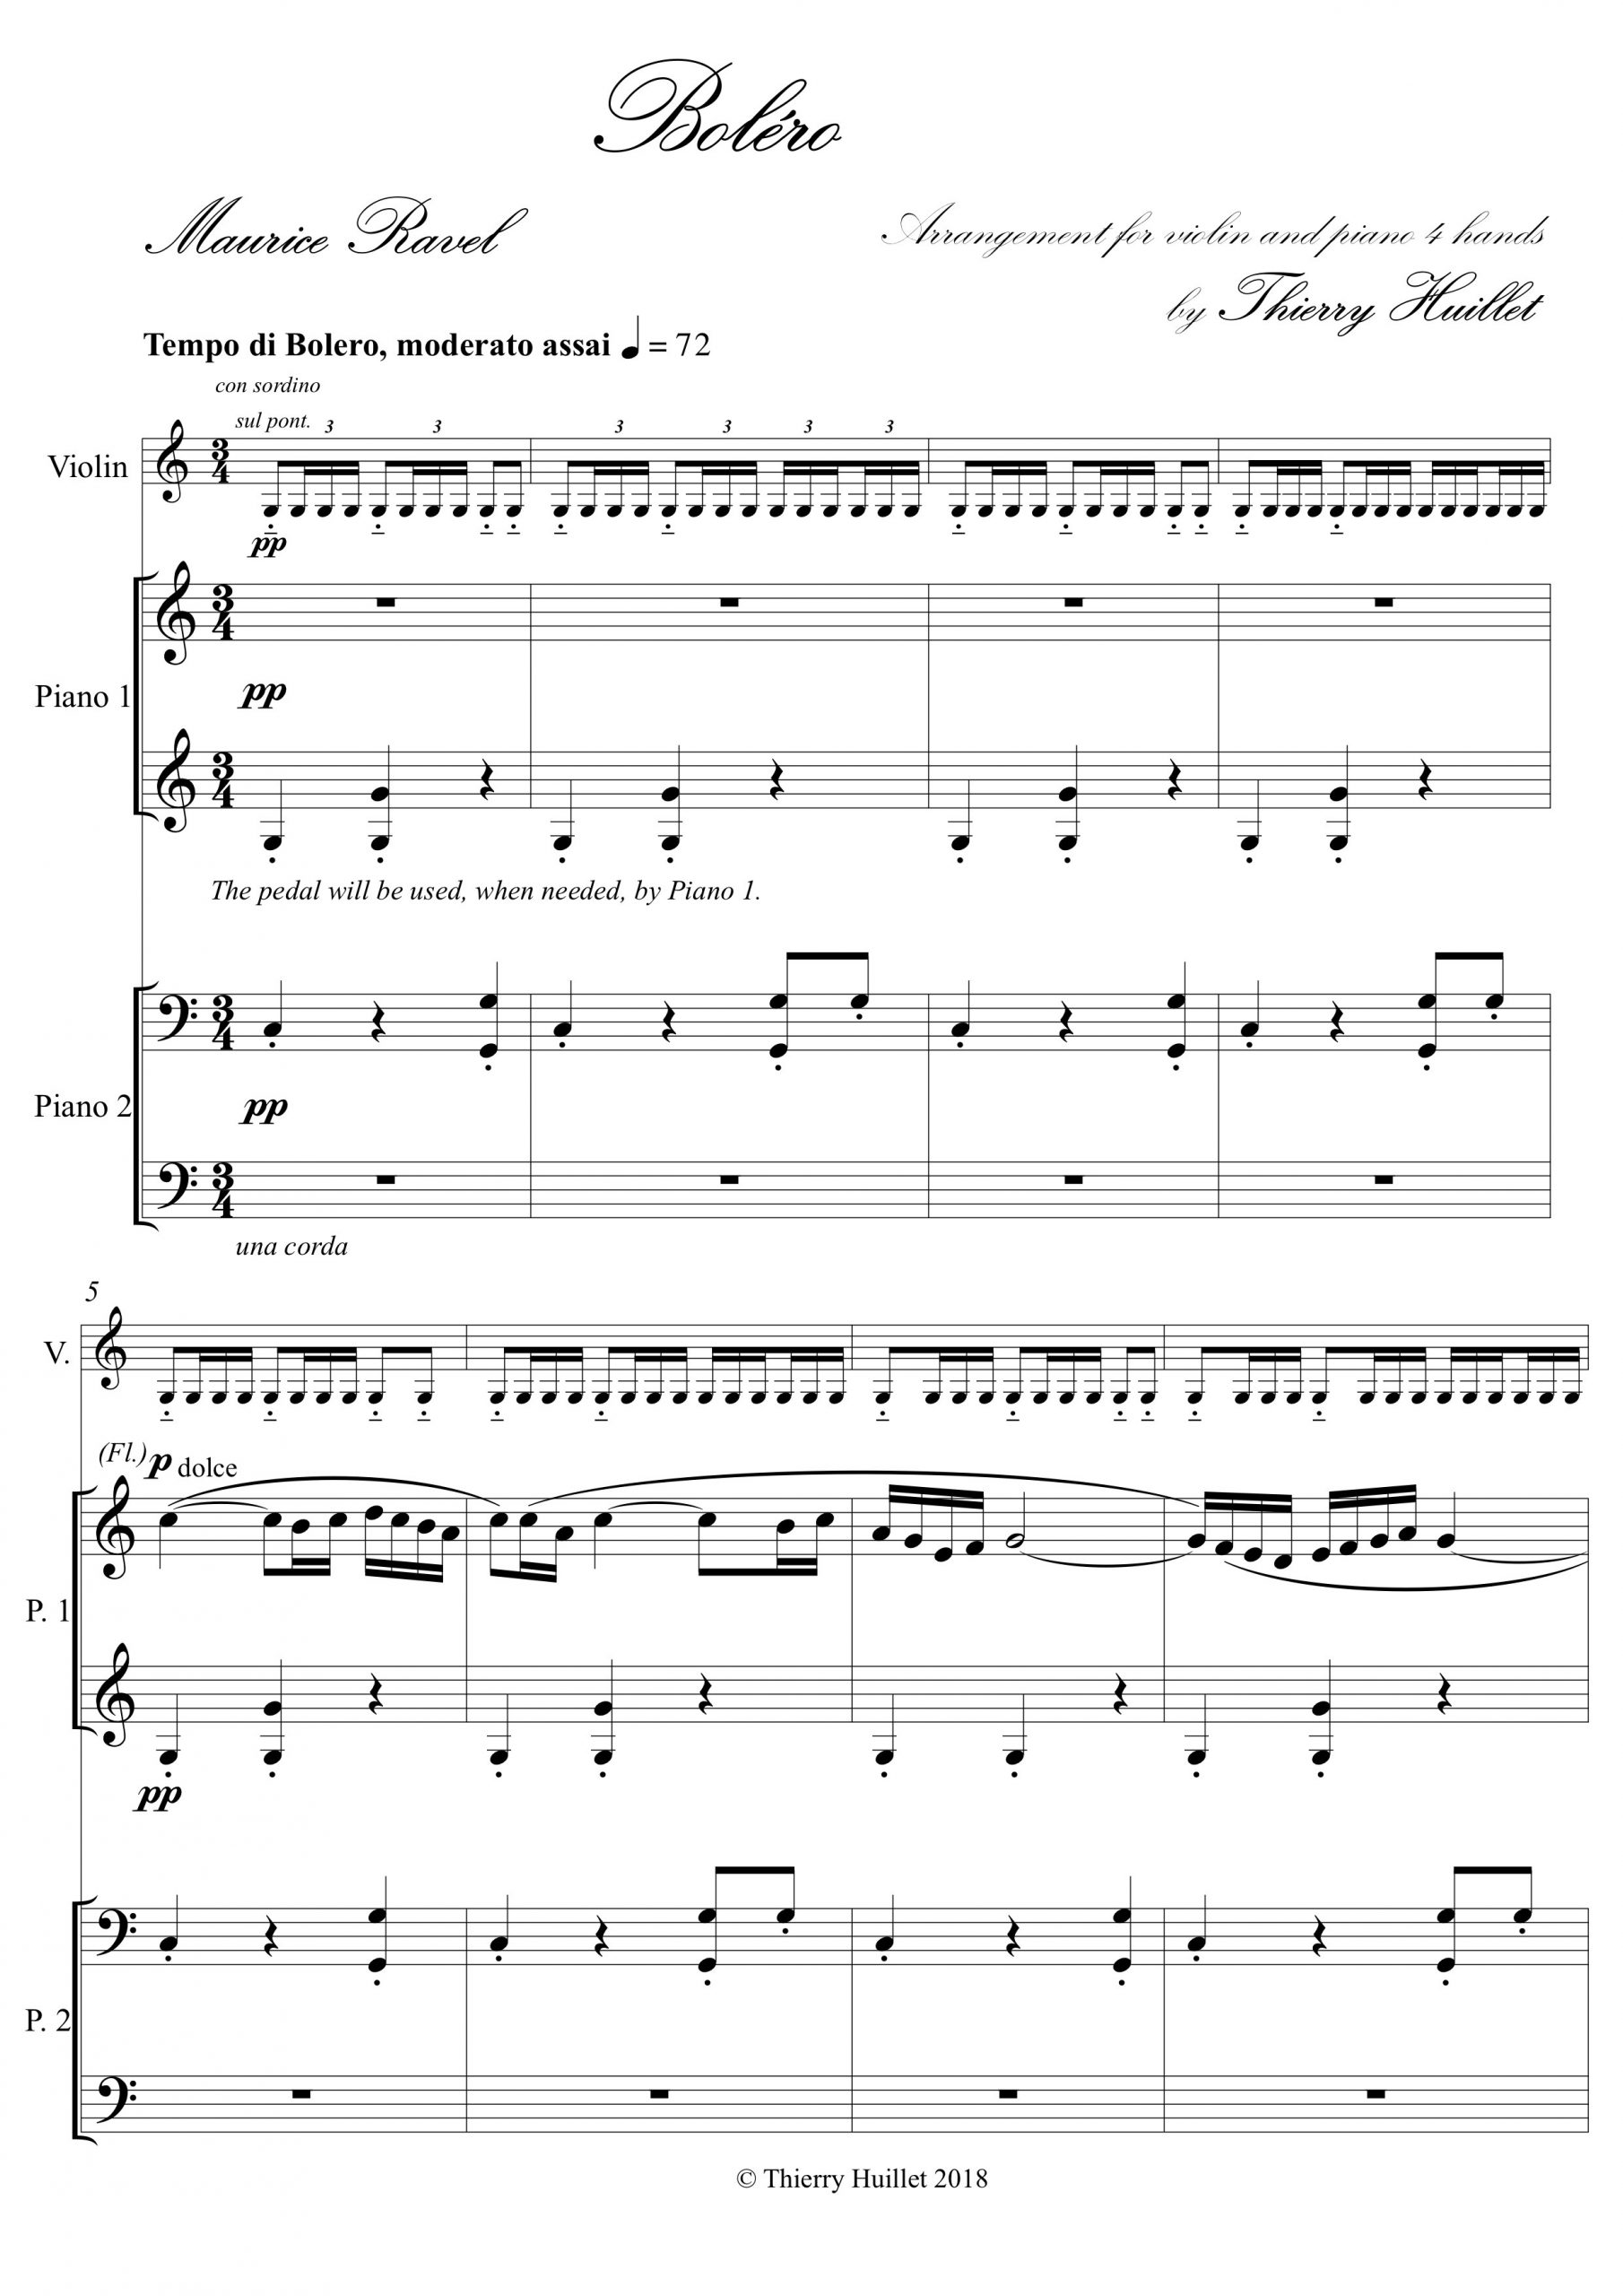 Ravel: Boléro - Score - transcription Huillet